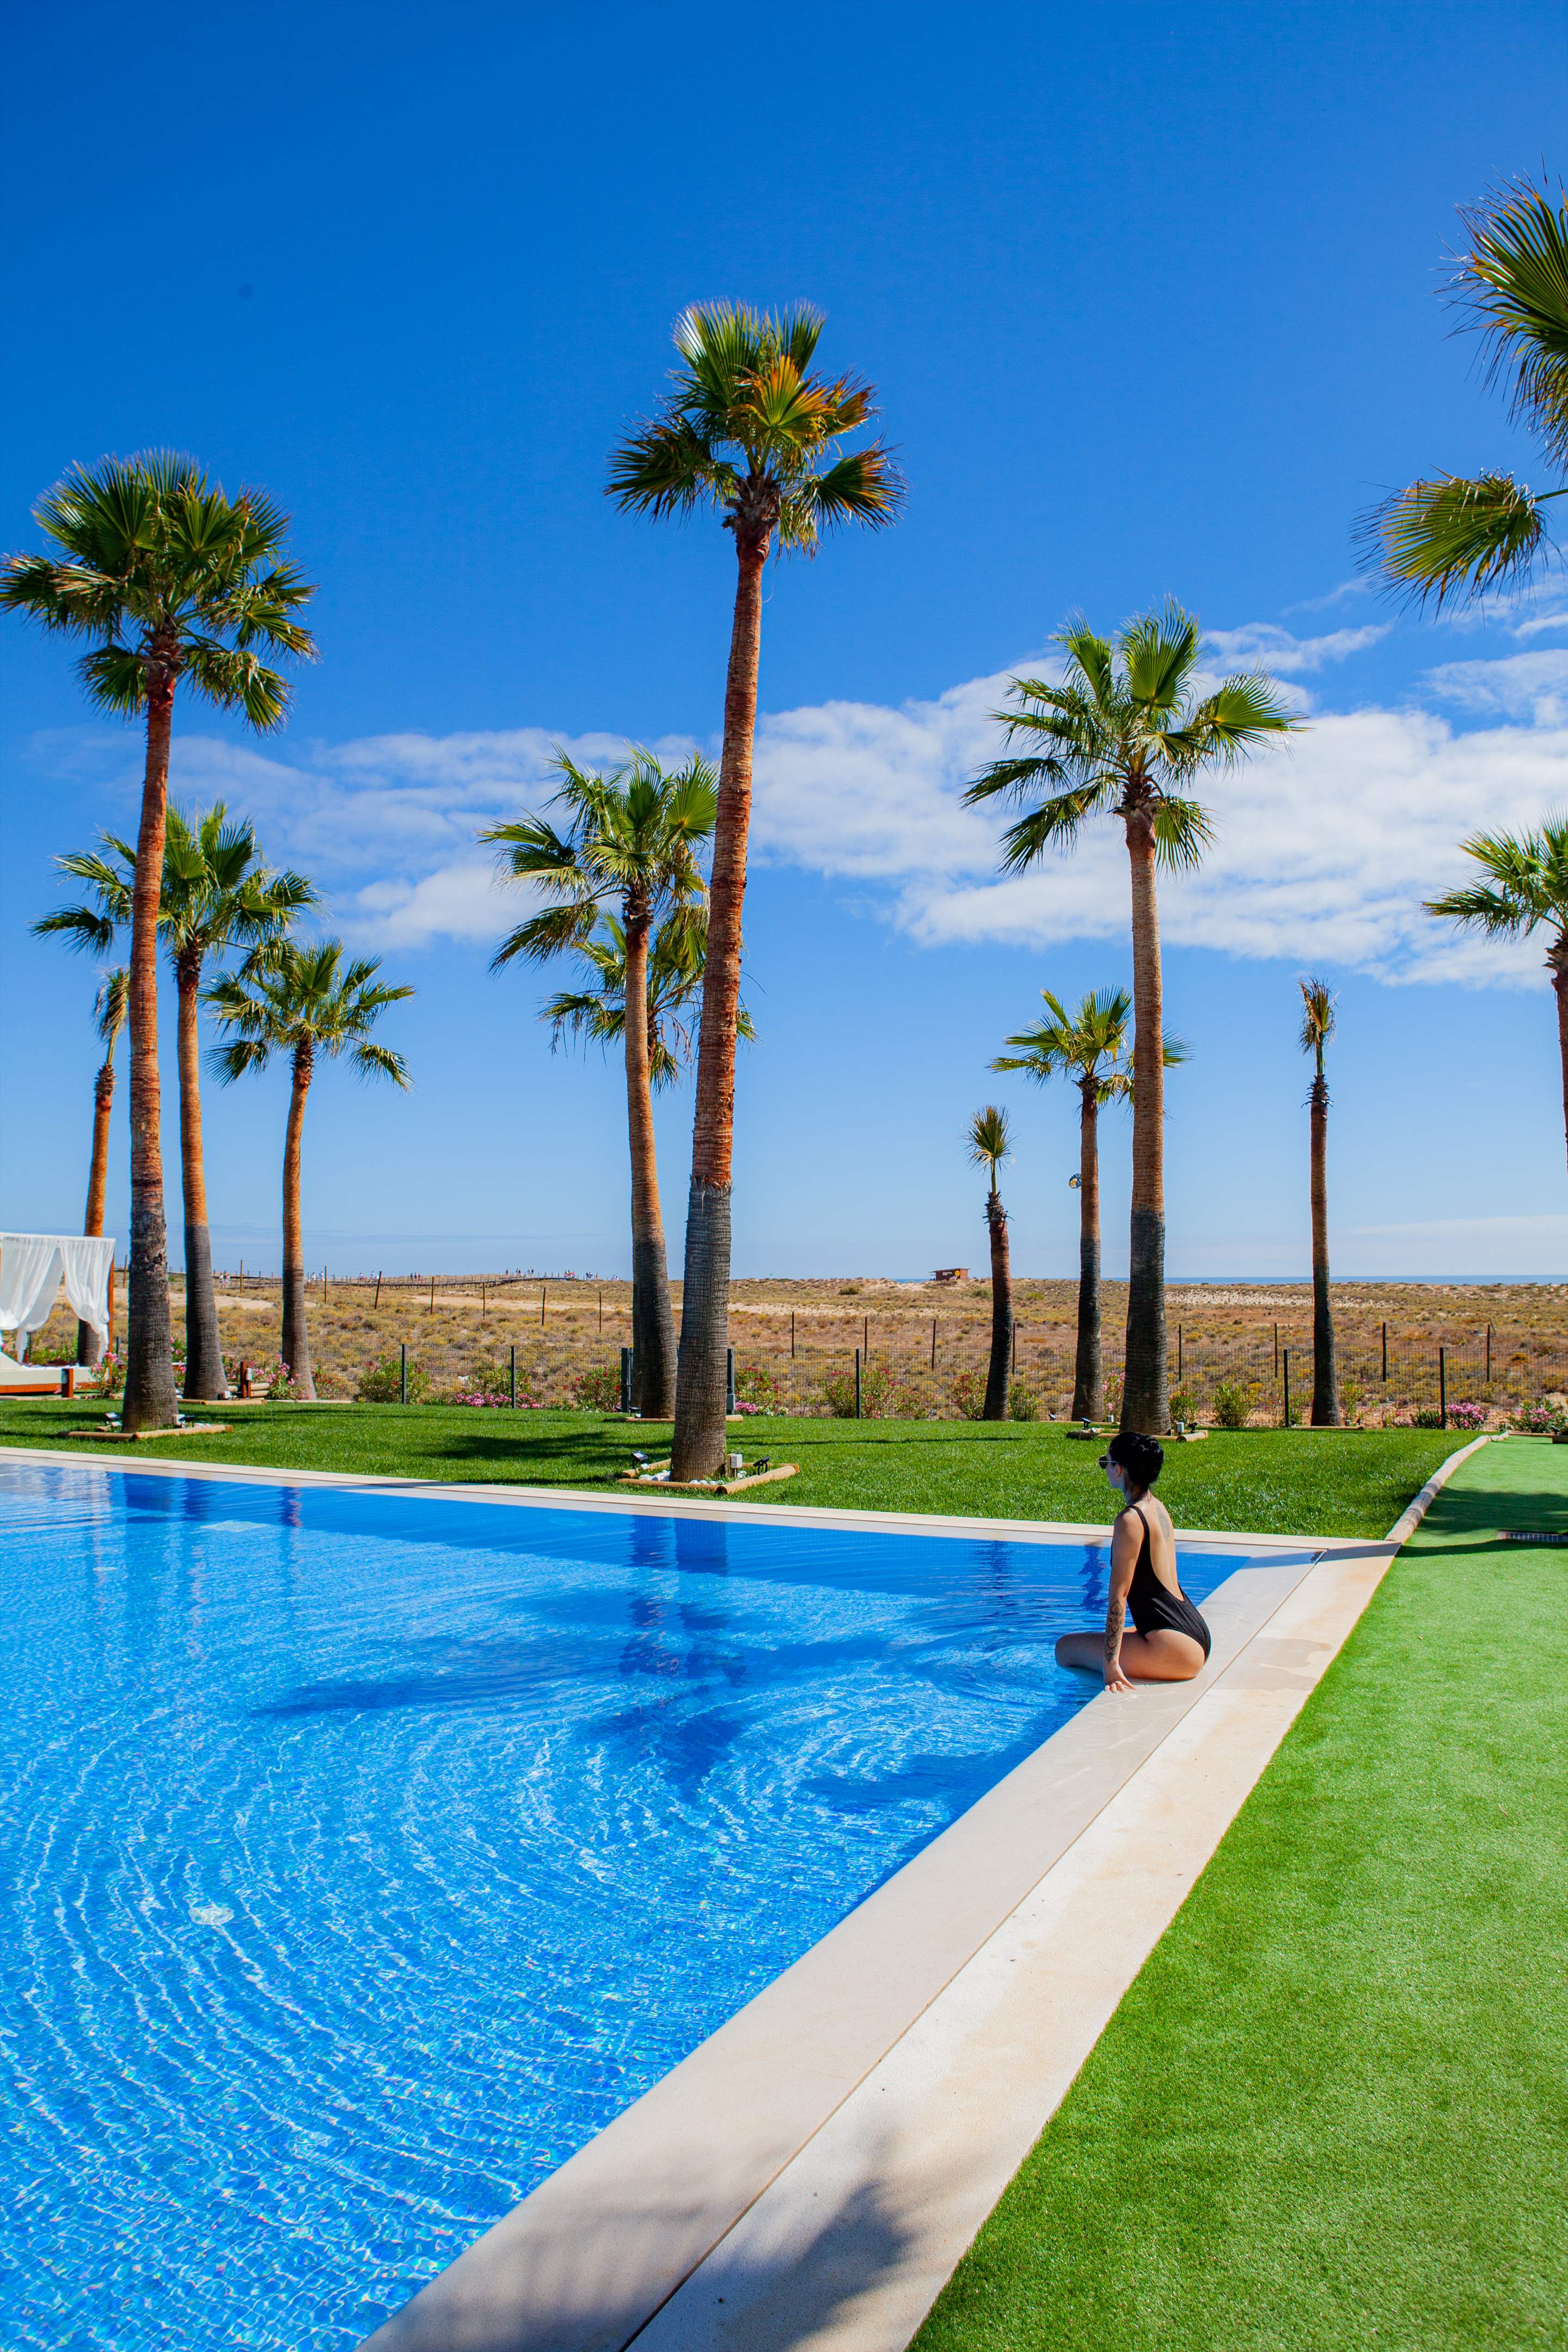 Vidamar Hotel Superior Pool View Room,HB,, Double Room, 1 bedroom hotel in Vidamar Resort, Algarve Photo #51